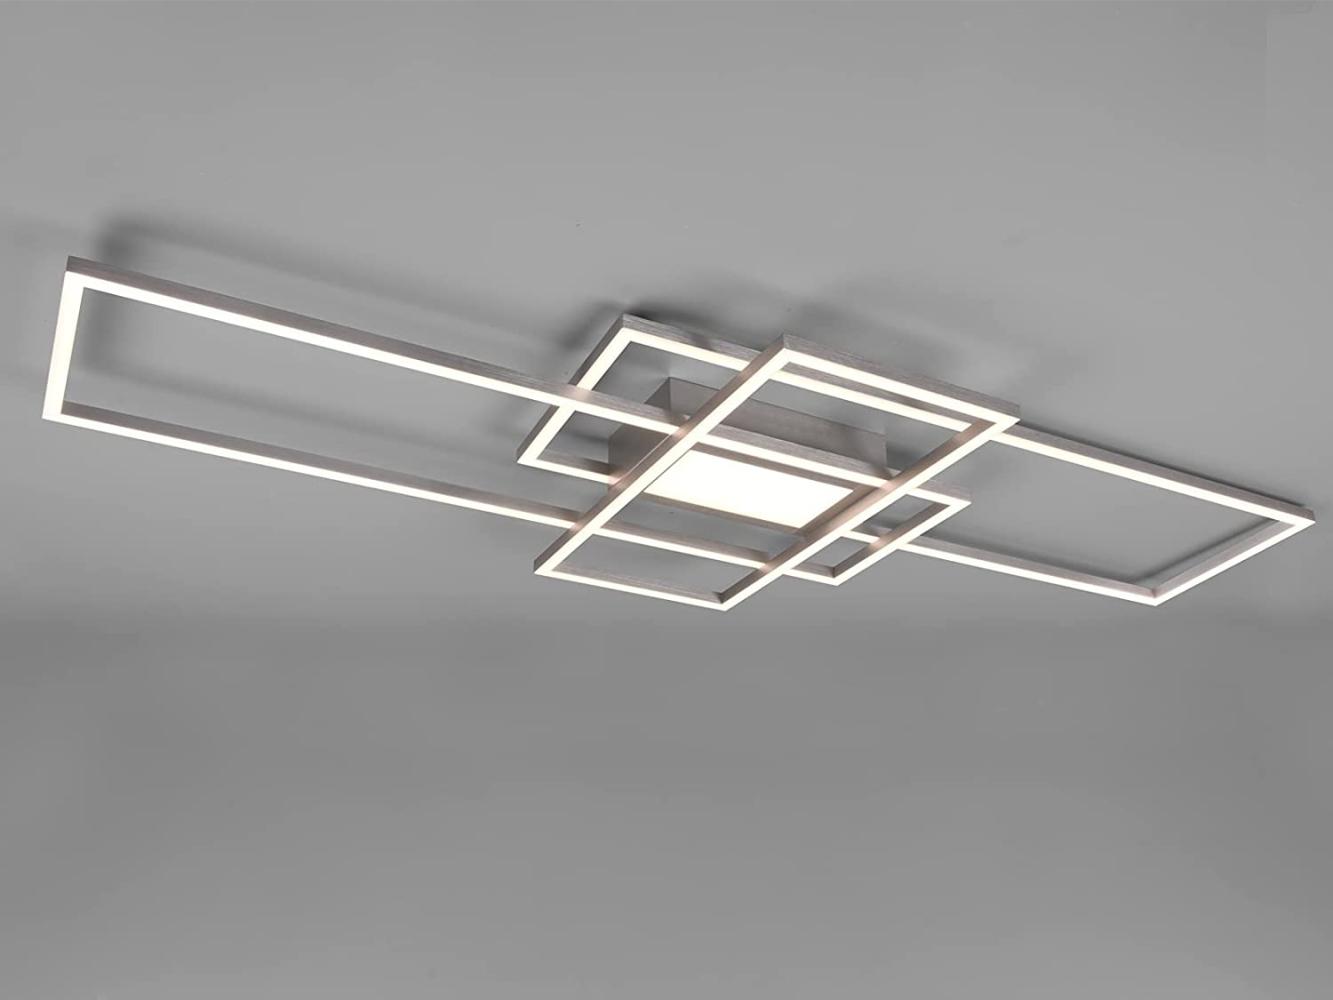 LED Deckenleuchte CANTA groß flach in 3 Stufen dimmbar, Silber matt Bild 1